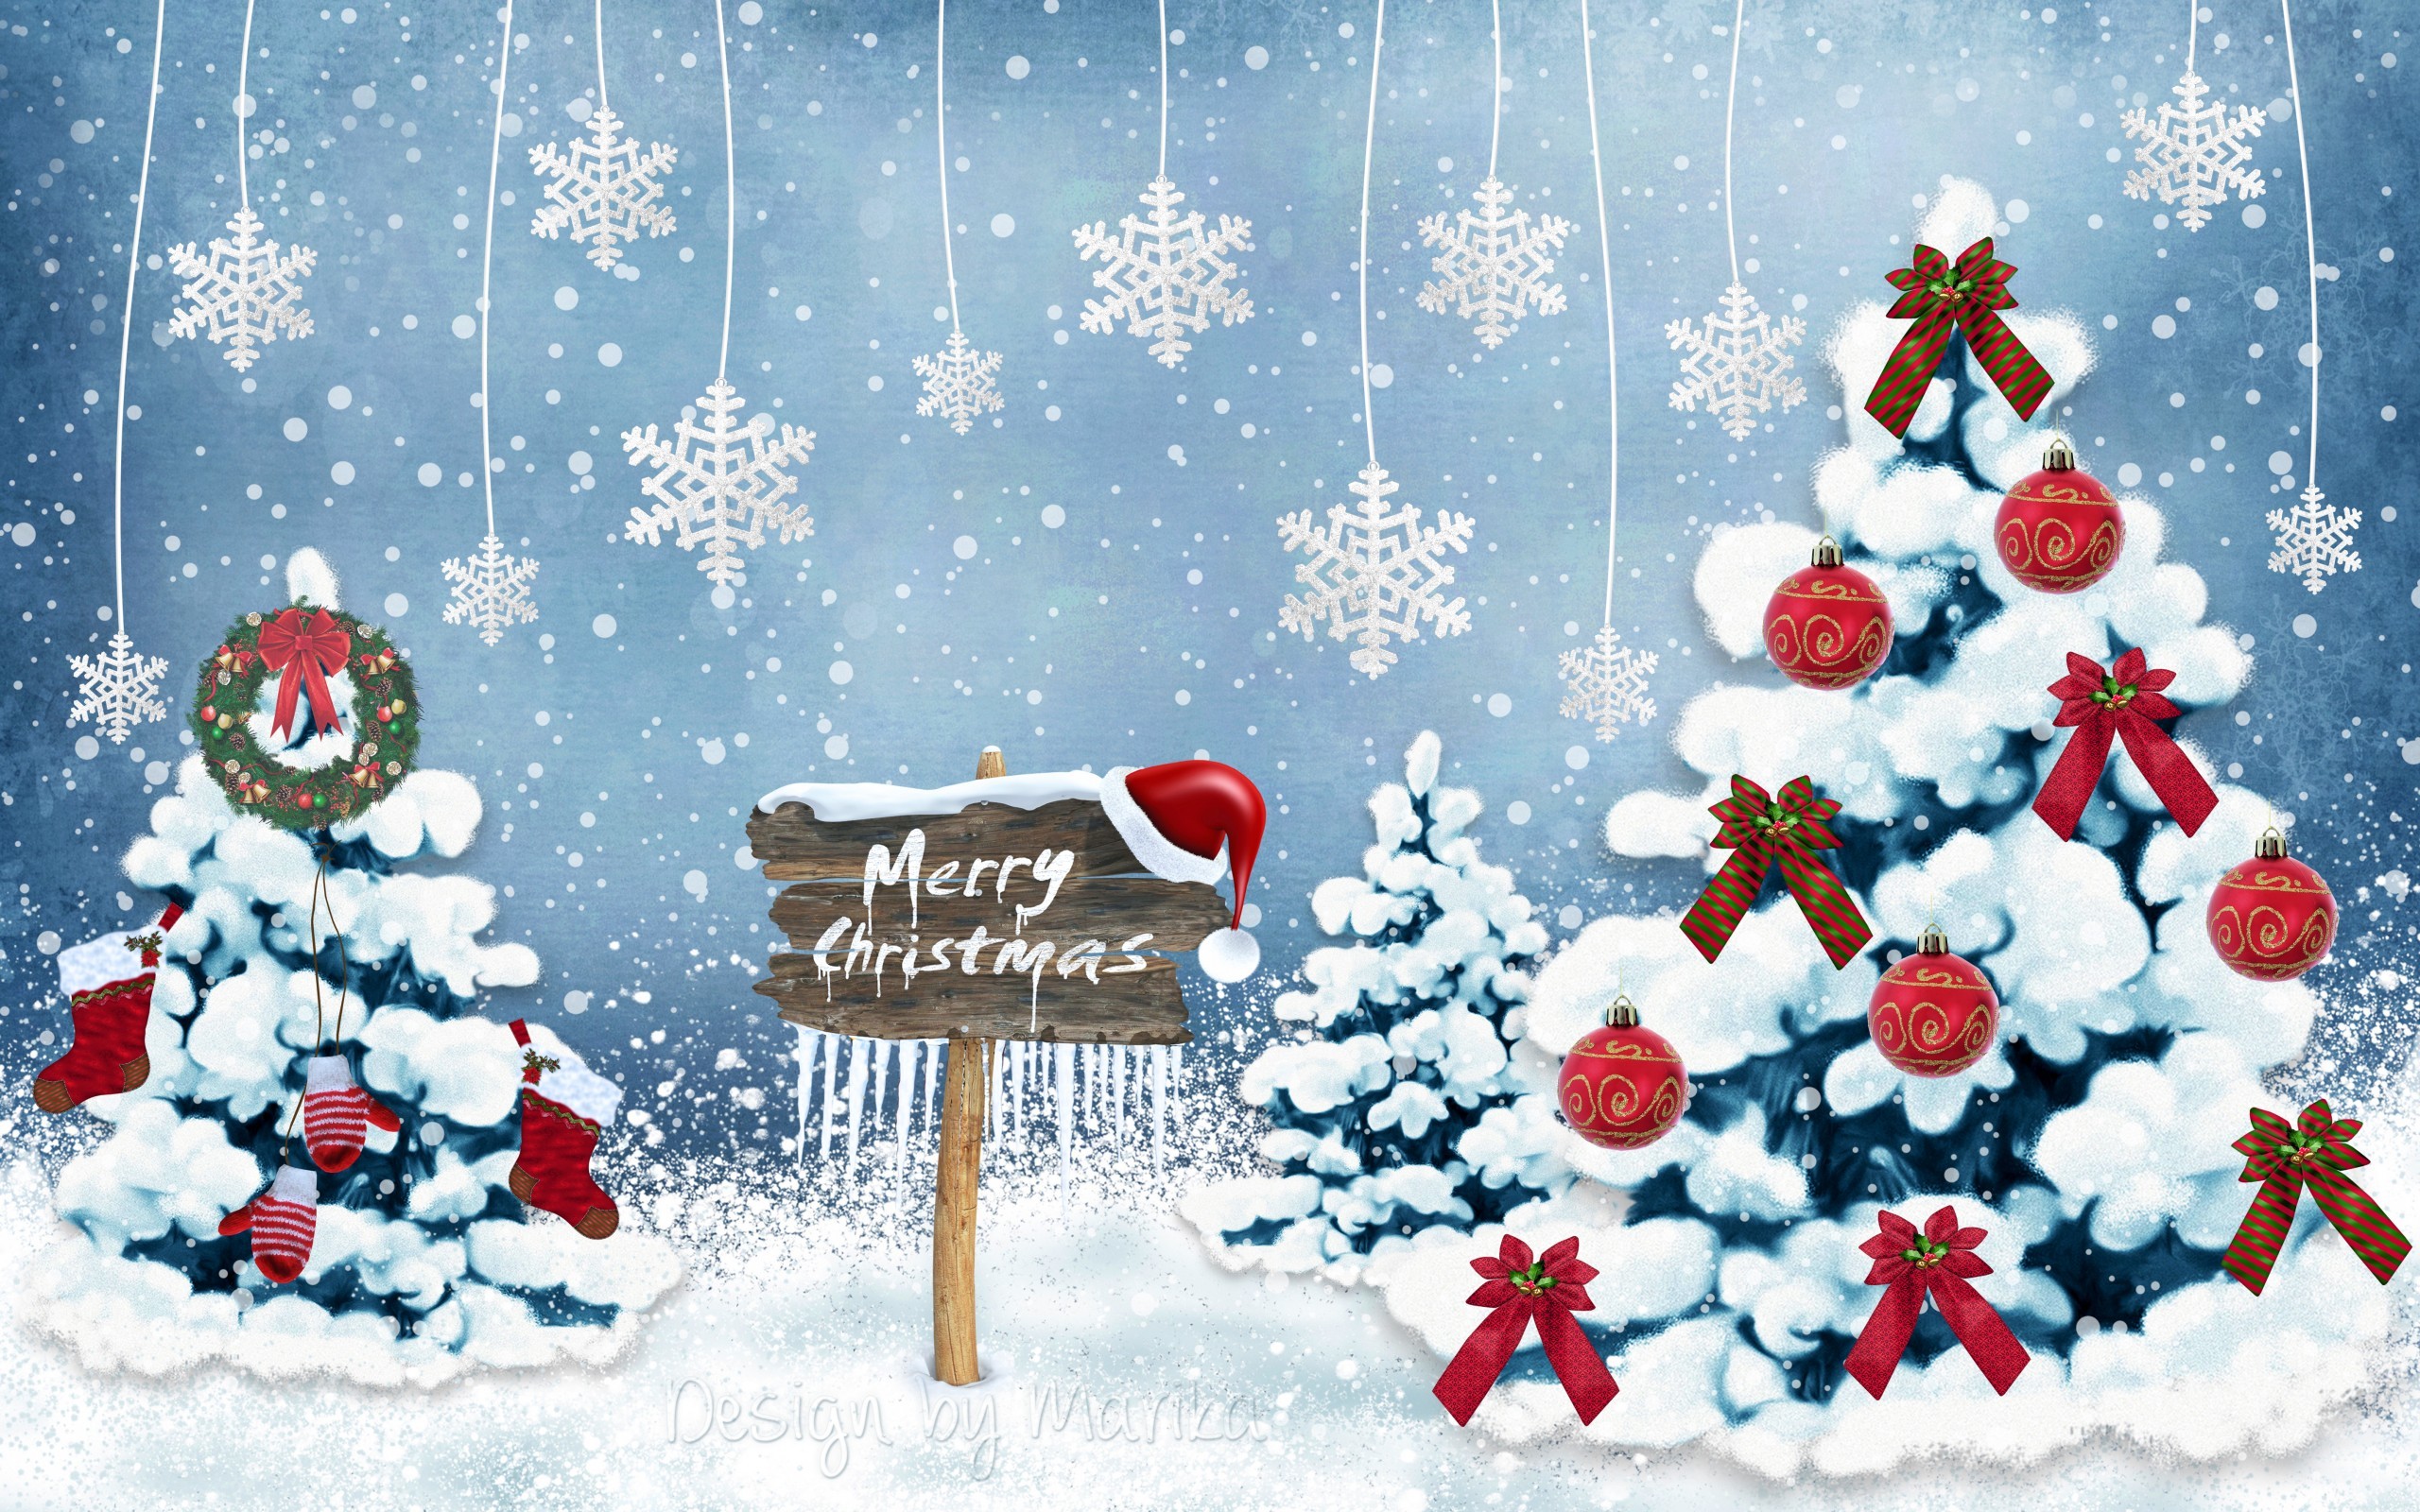 1080p Christmas HD Wallpaper